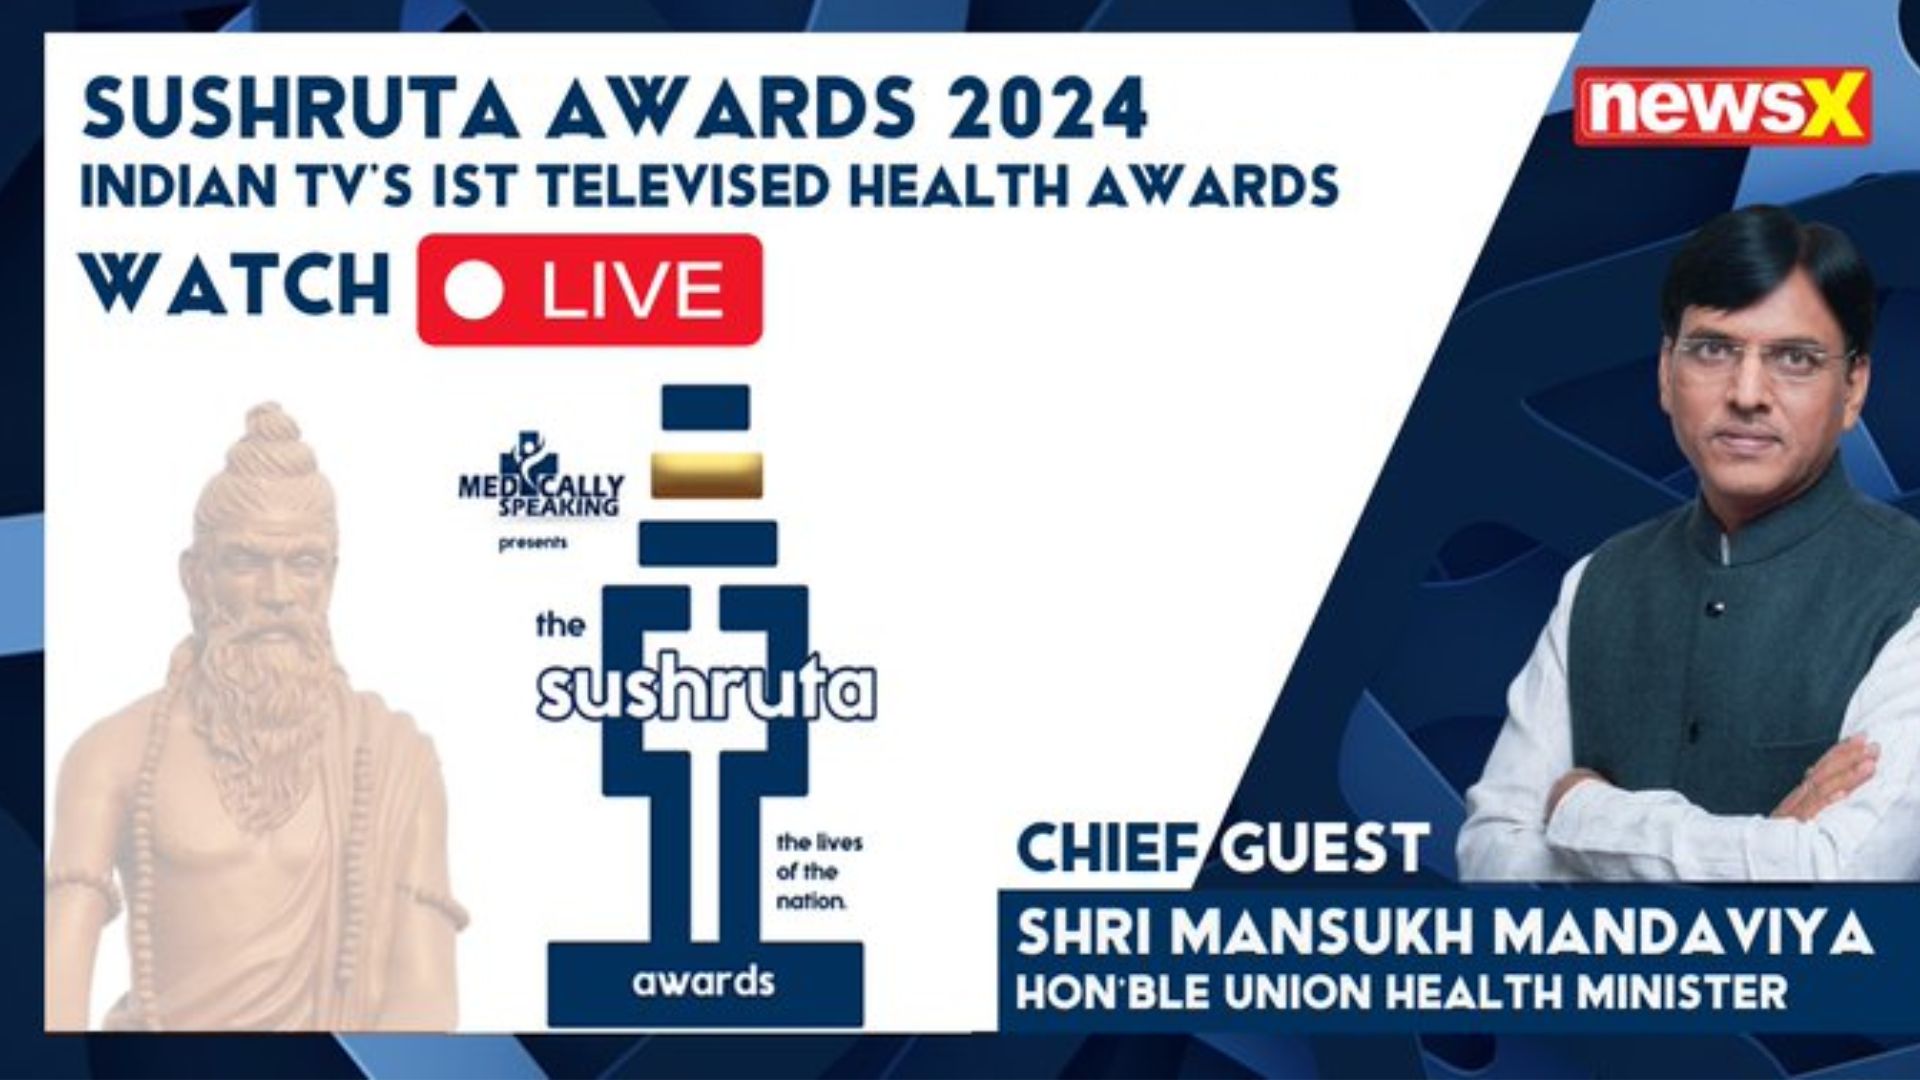 News X:  Medically Speaking introduces inaugural Sushruta Awards